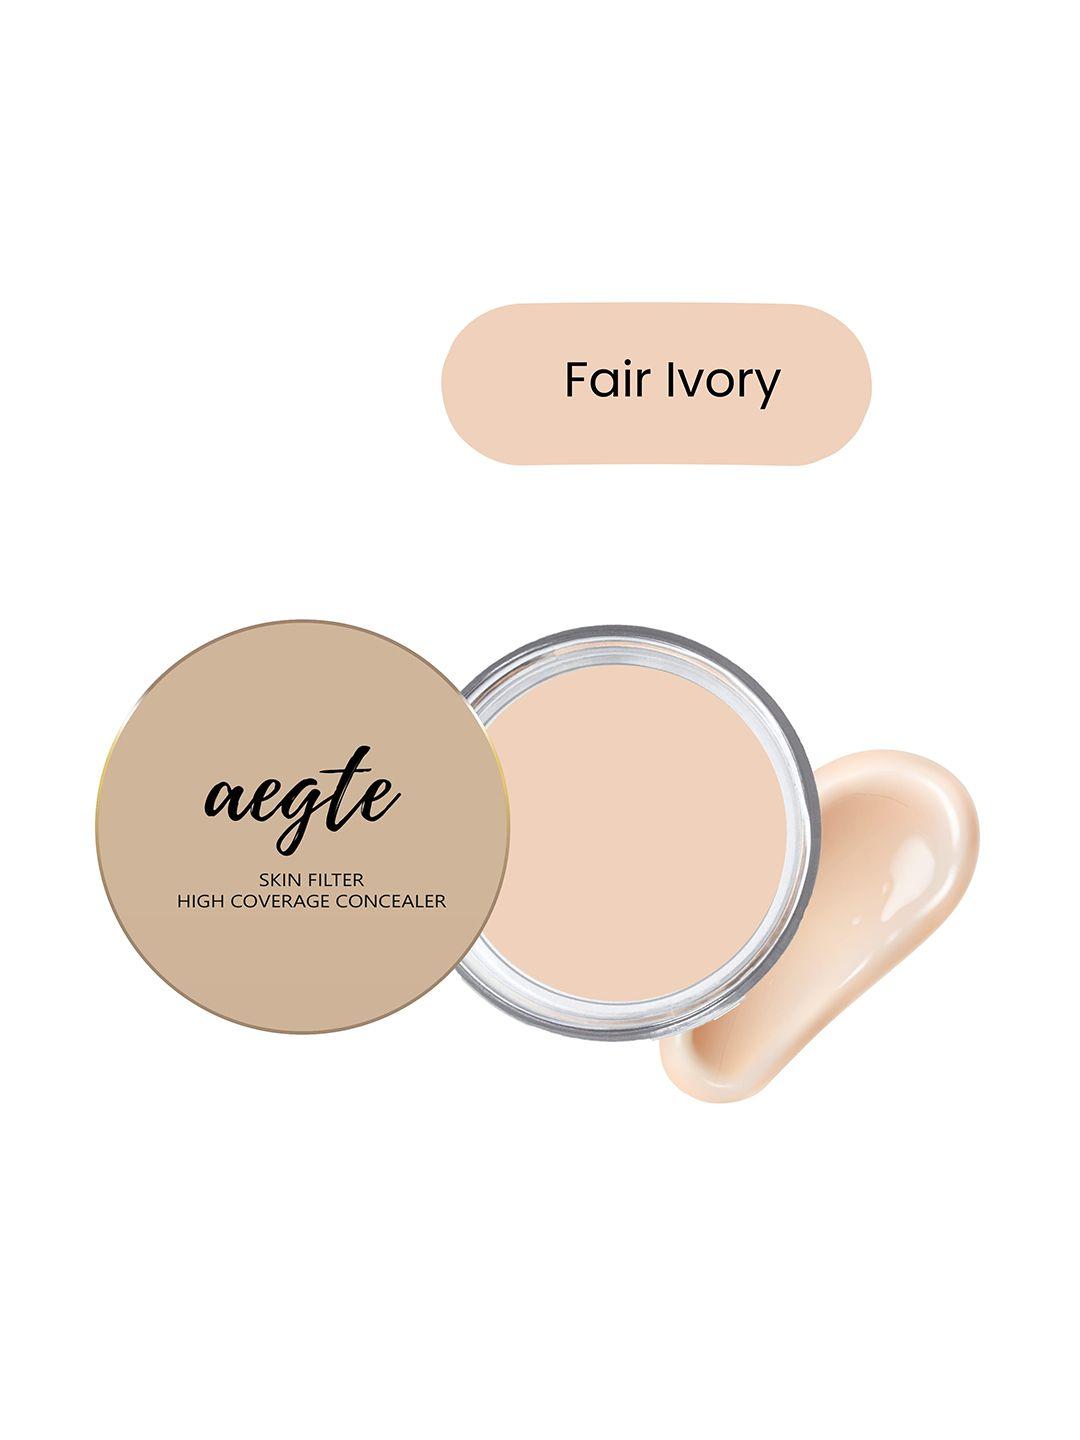 aegte skin filter high coverage concealer - fair ivory